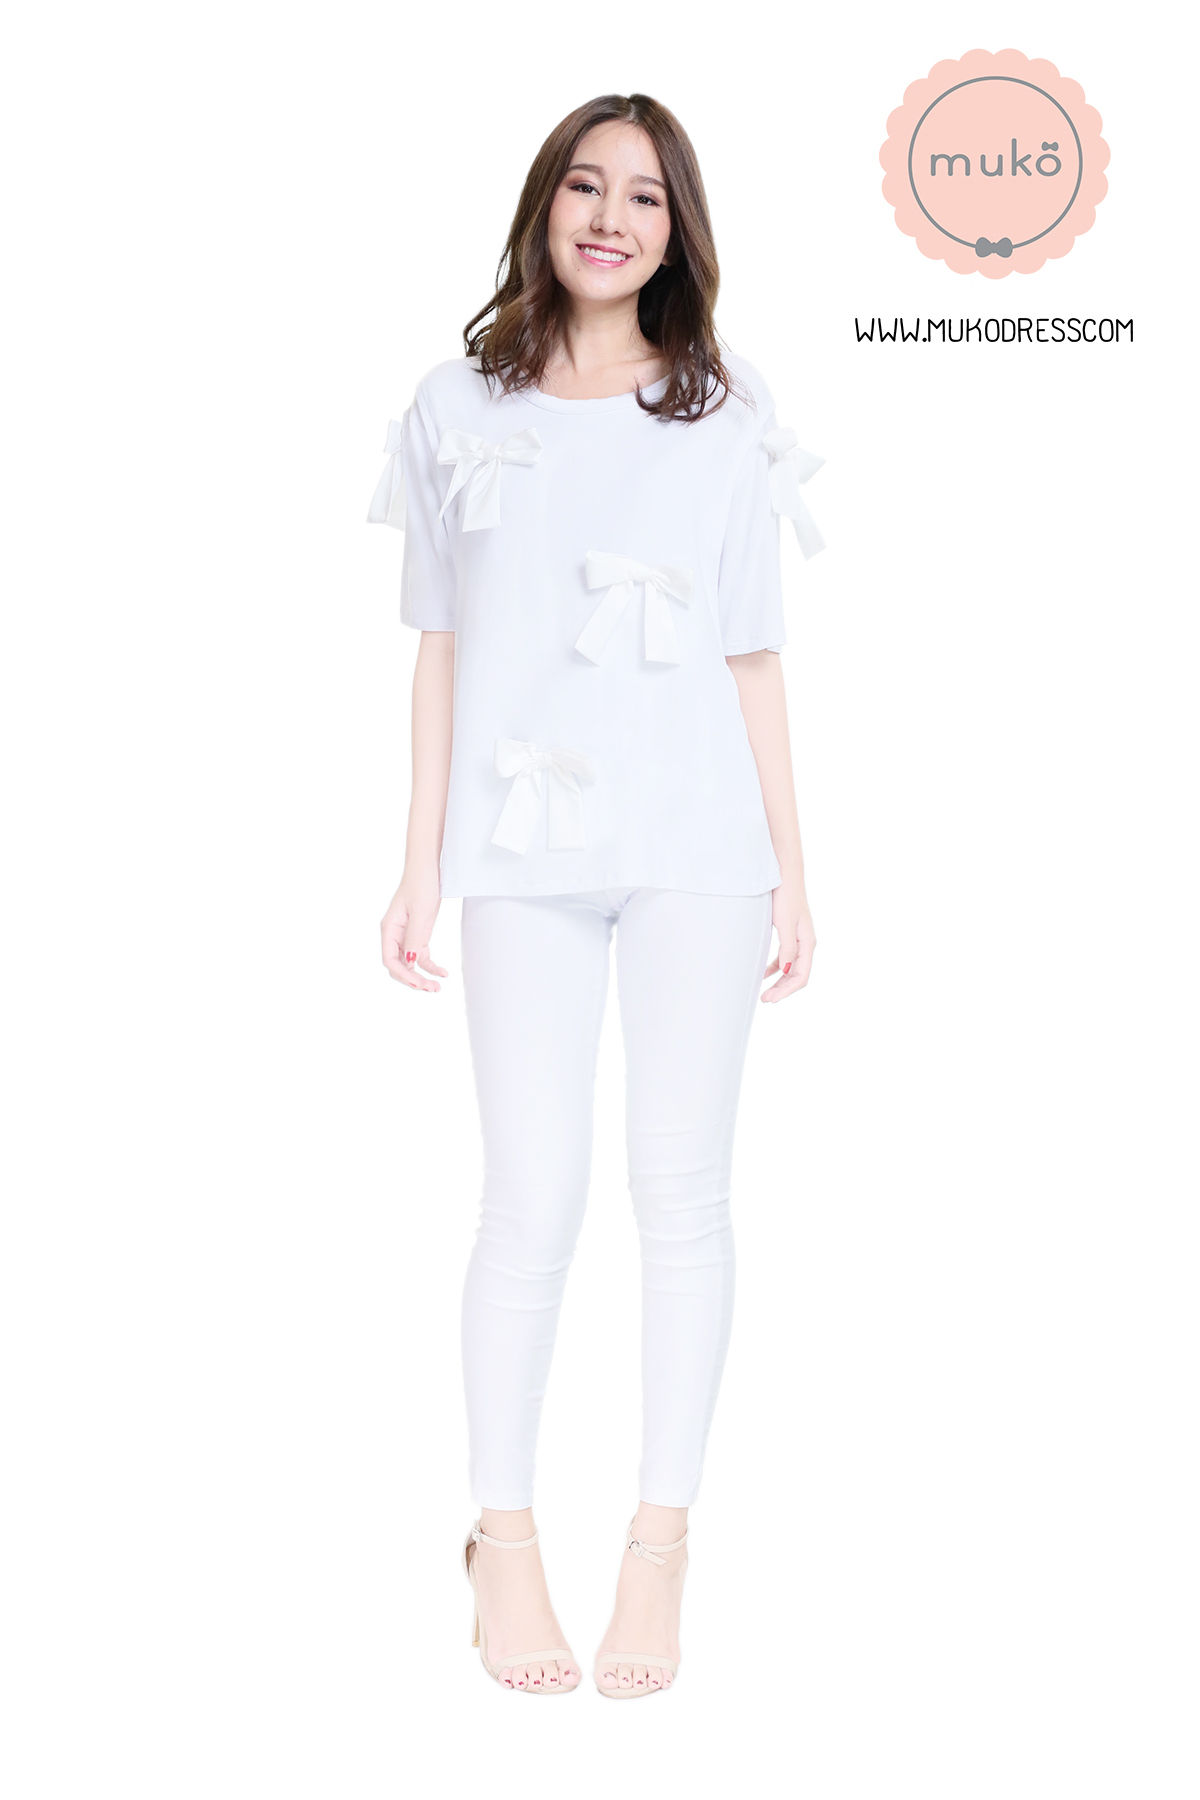 Muko Cher เสื้อเปิดให้นม TC26-008 สีขาว